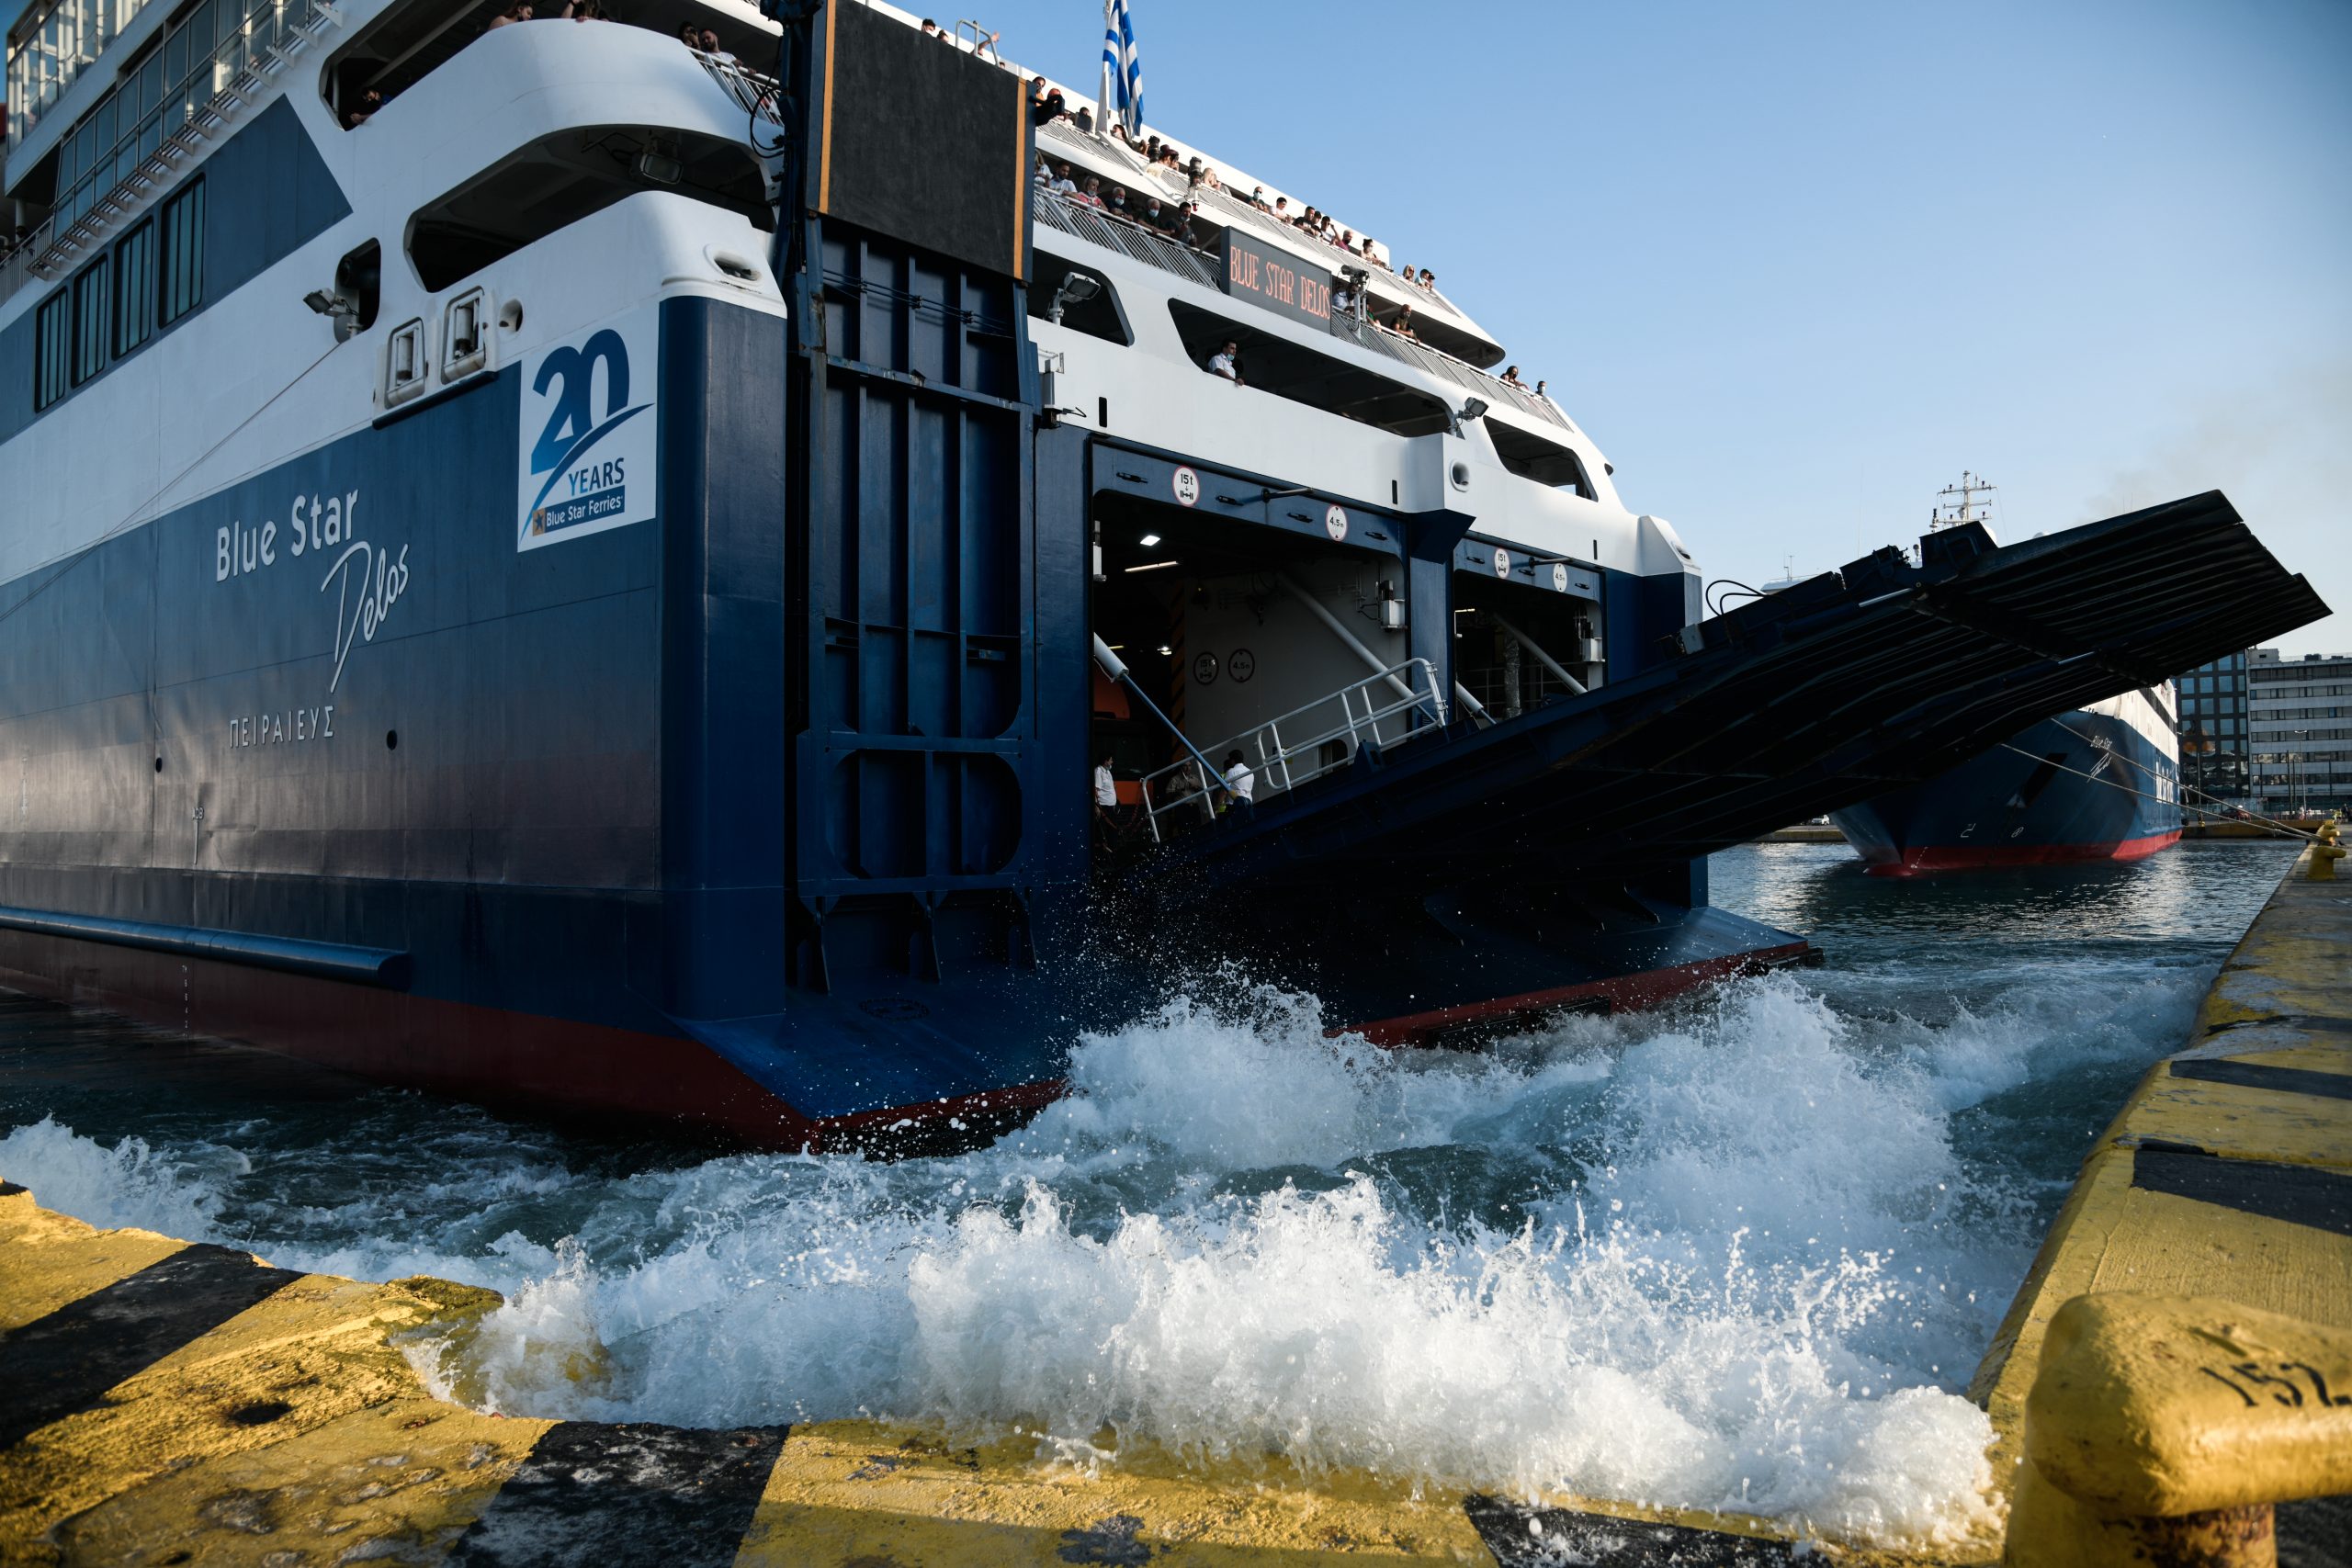 Greek coastal shipping: Over 80 million euros in subsidy arrears for “barren lines”